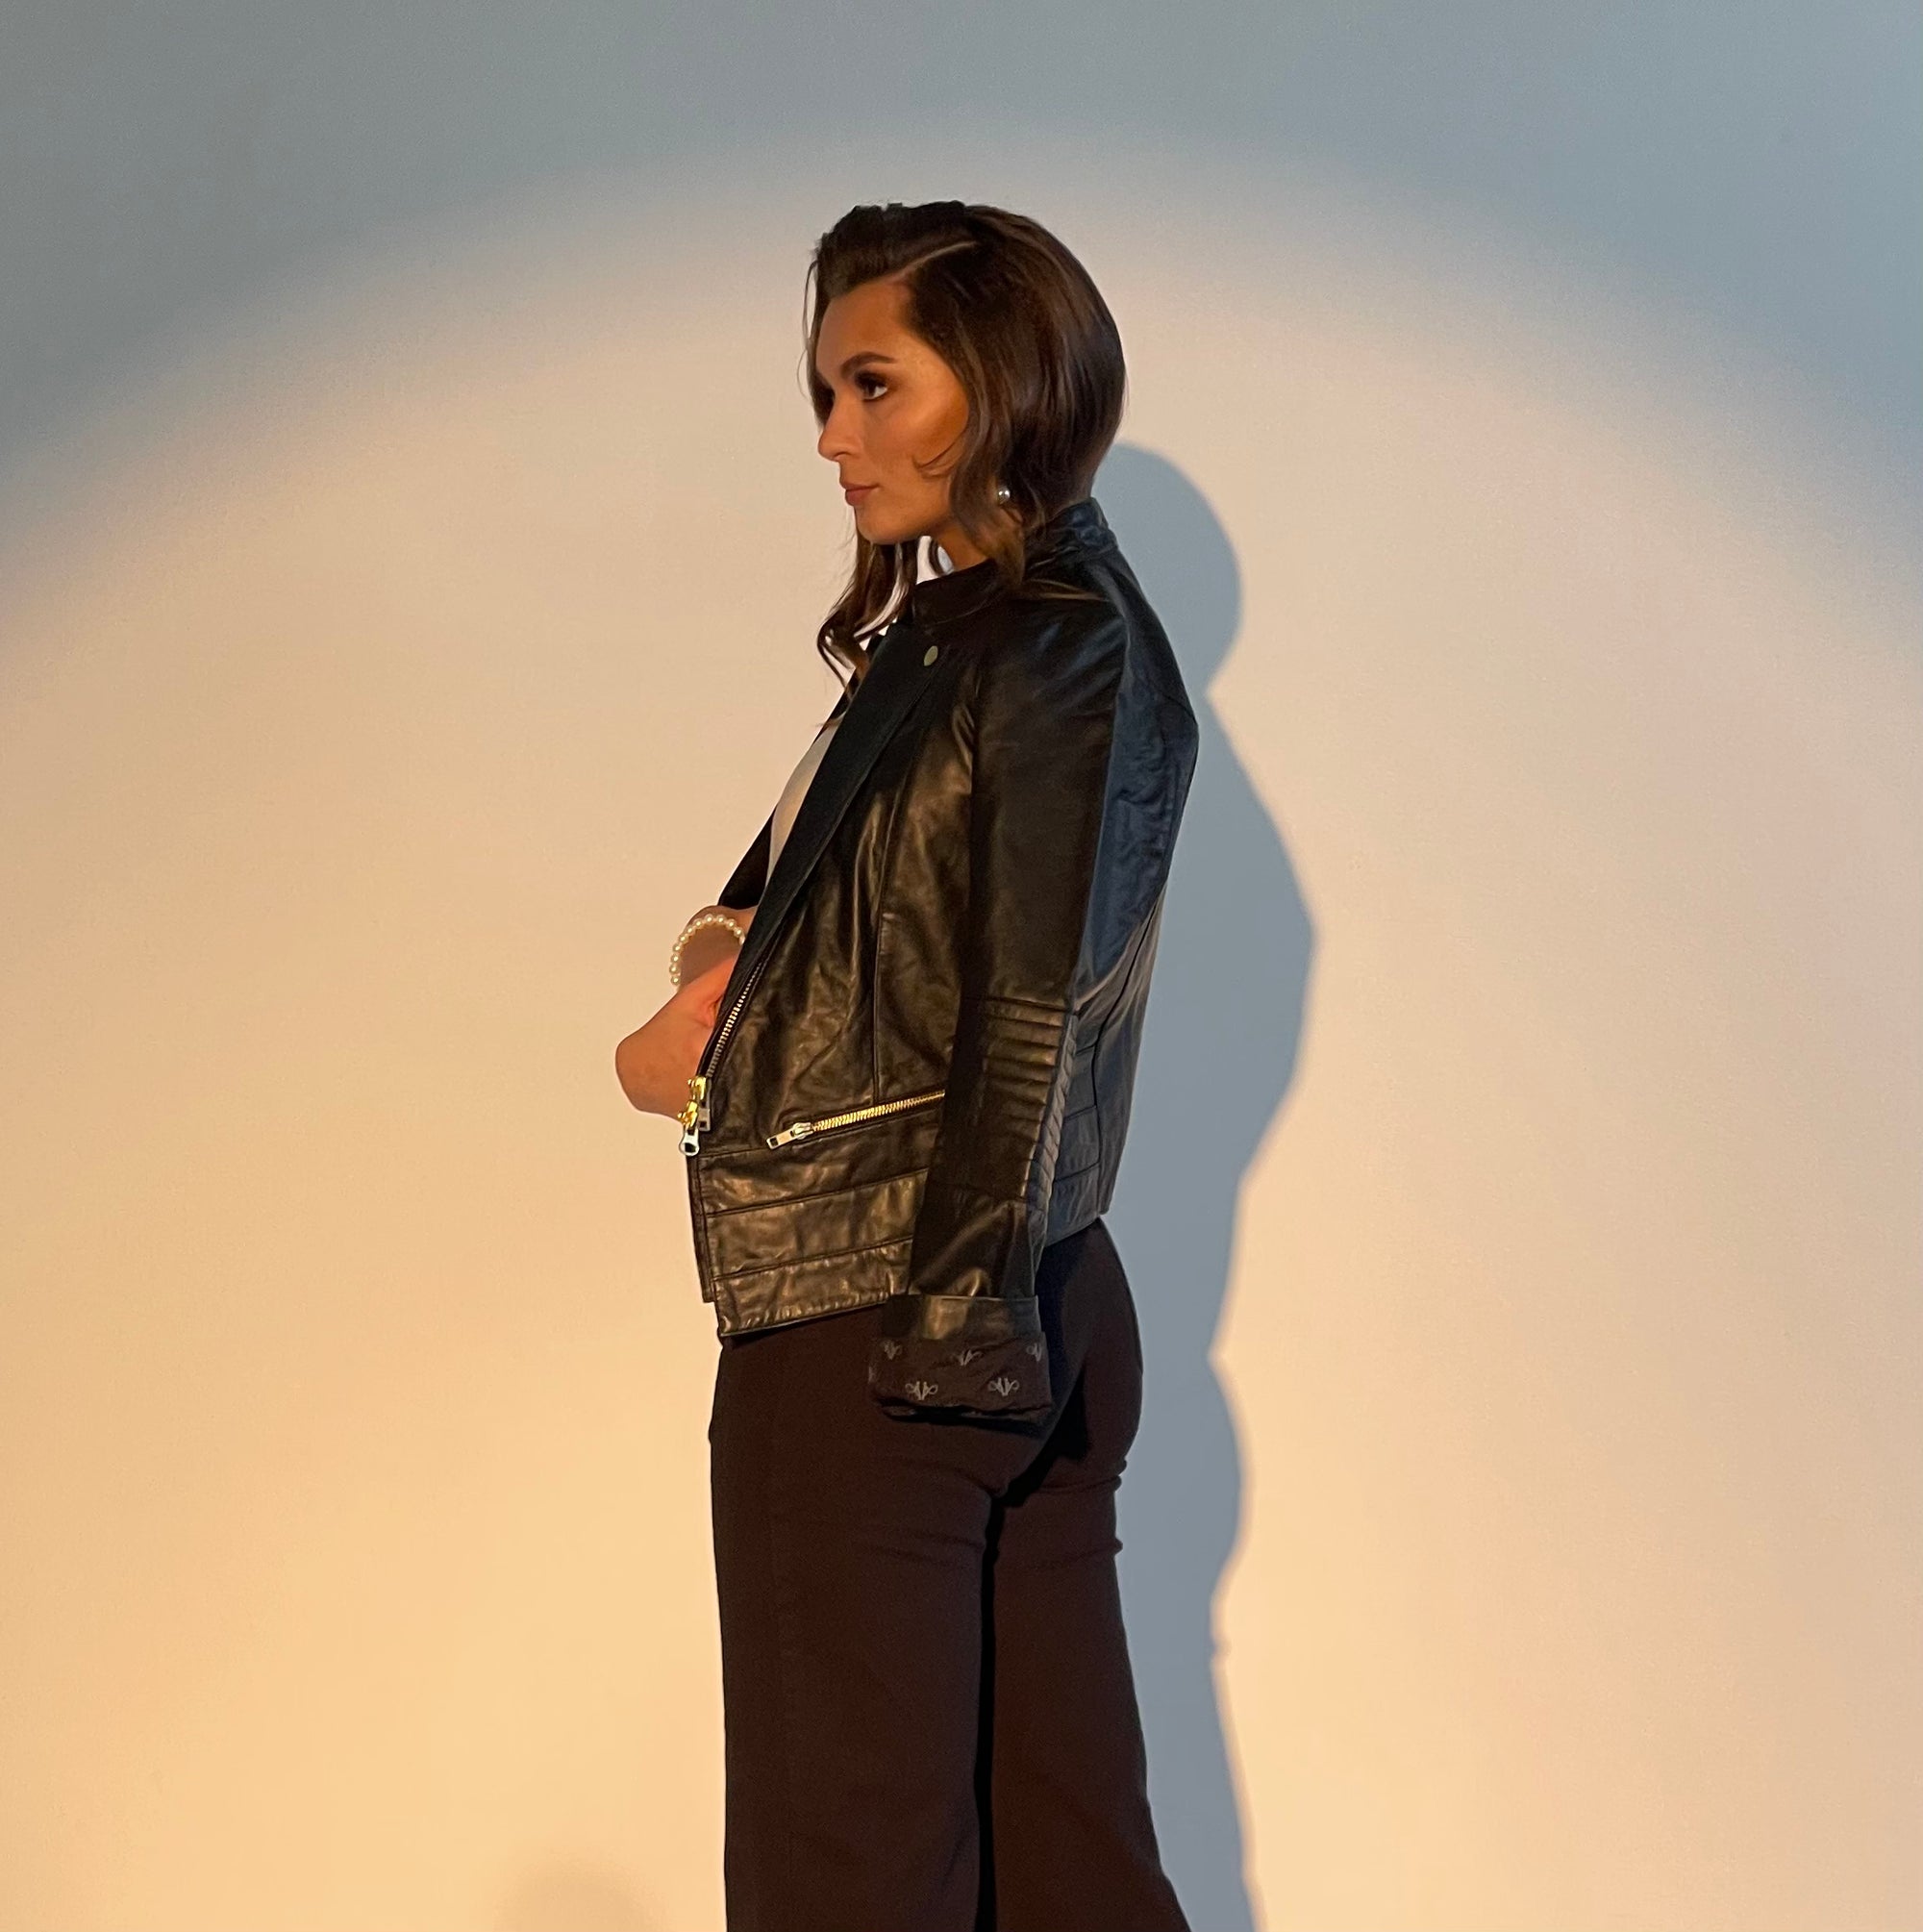 AndreA - Leather Jacket